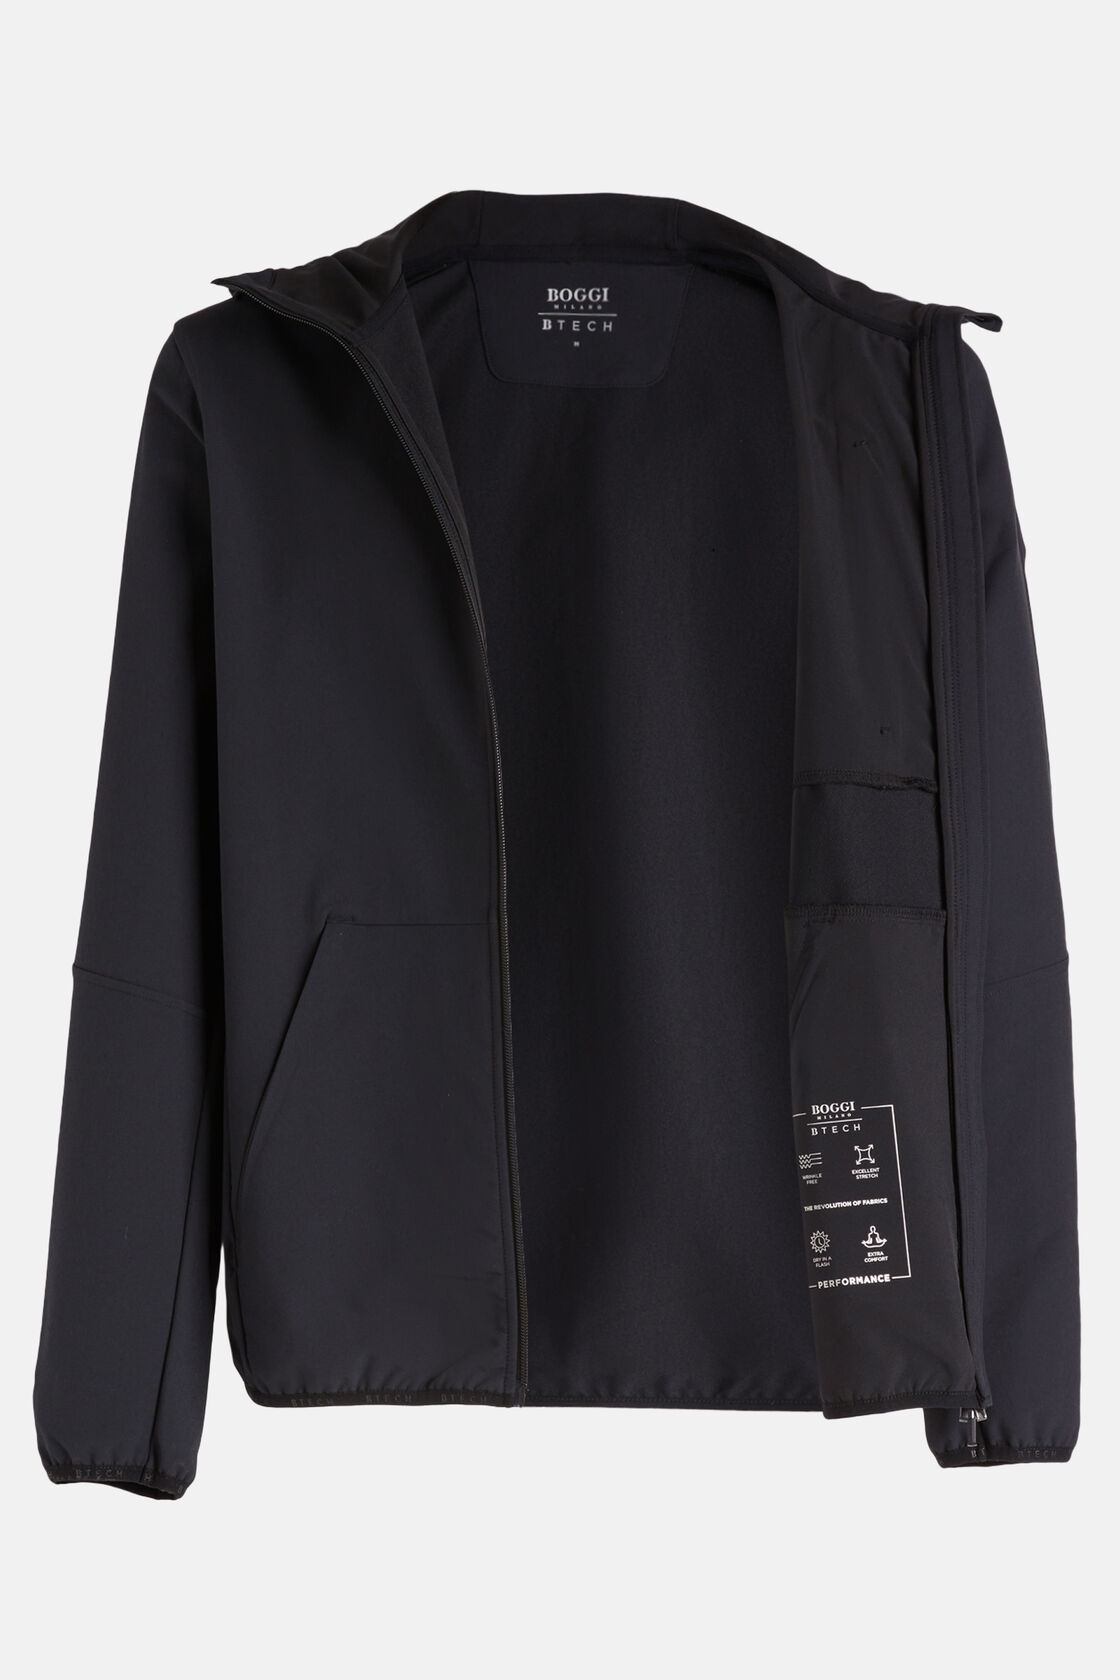 Windproof Jacket in B-Tech Stretch Nylon, Black, hi-res